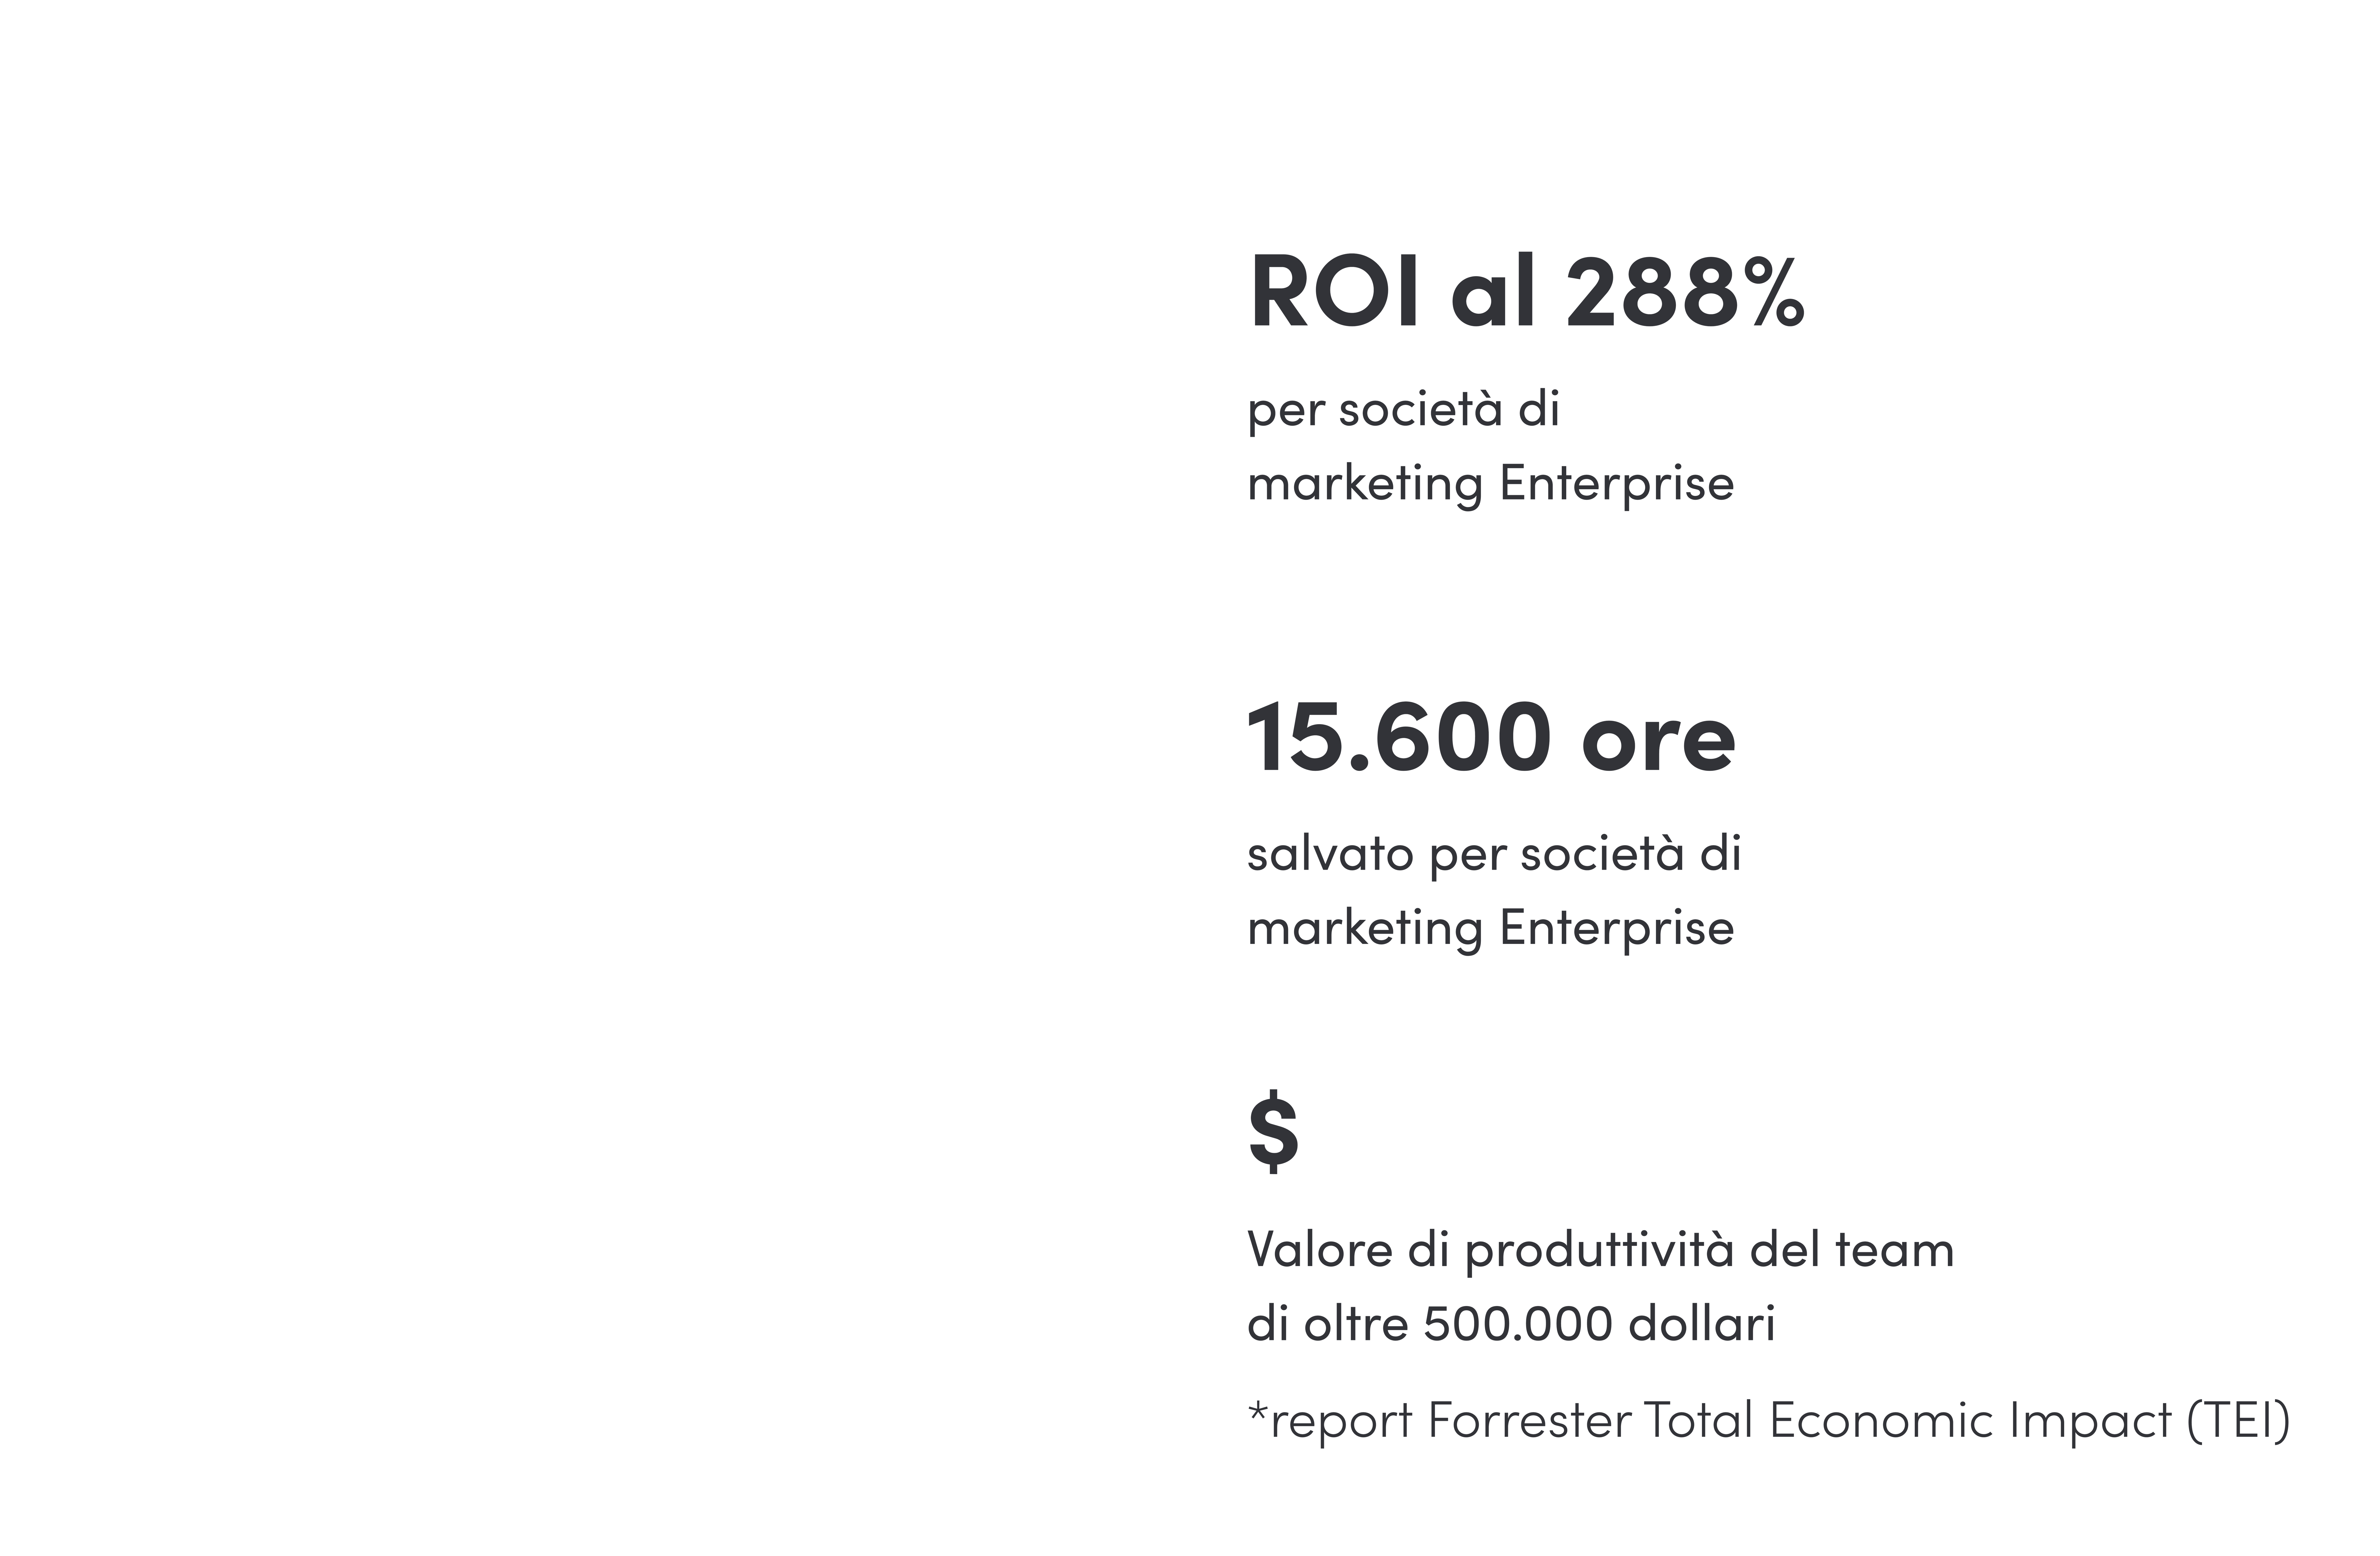 288% ROI for Enterprise marketing company. 15,600 hours saved for Enterprise marketing company. Team productivity value of over $500K